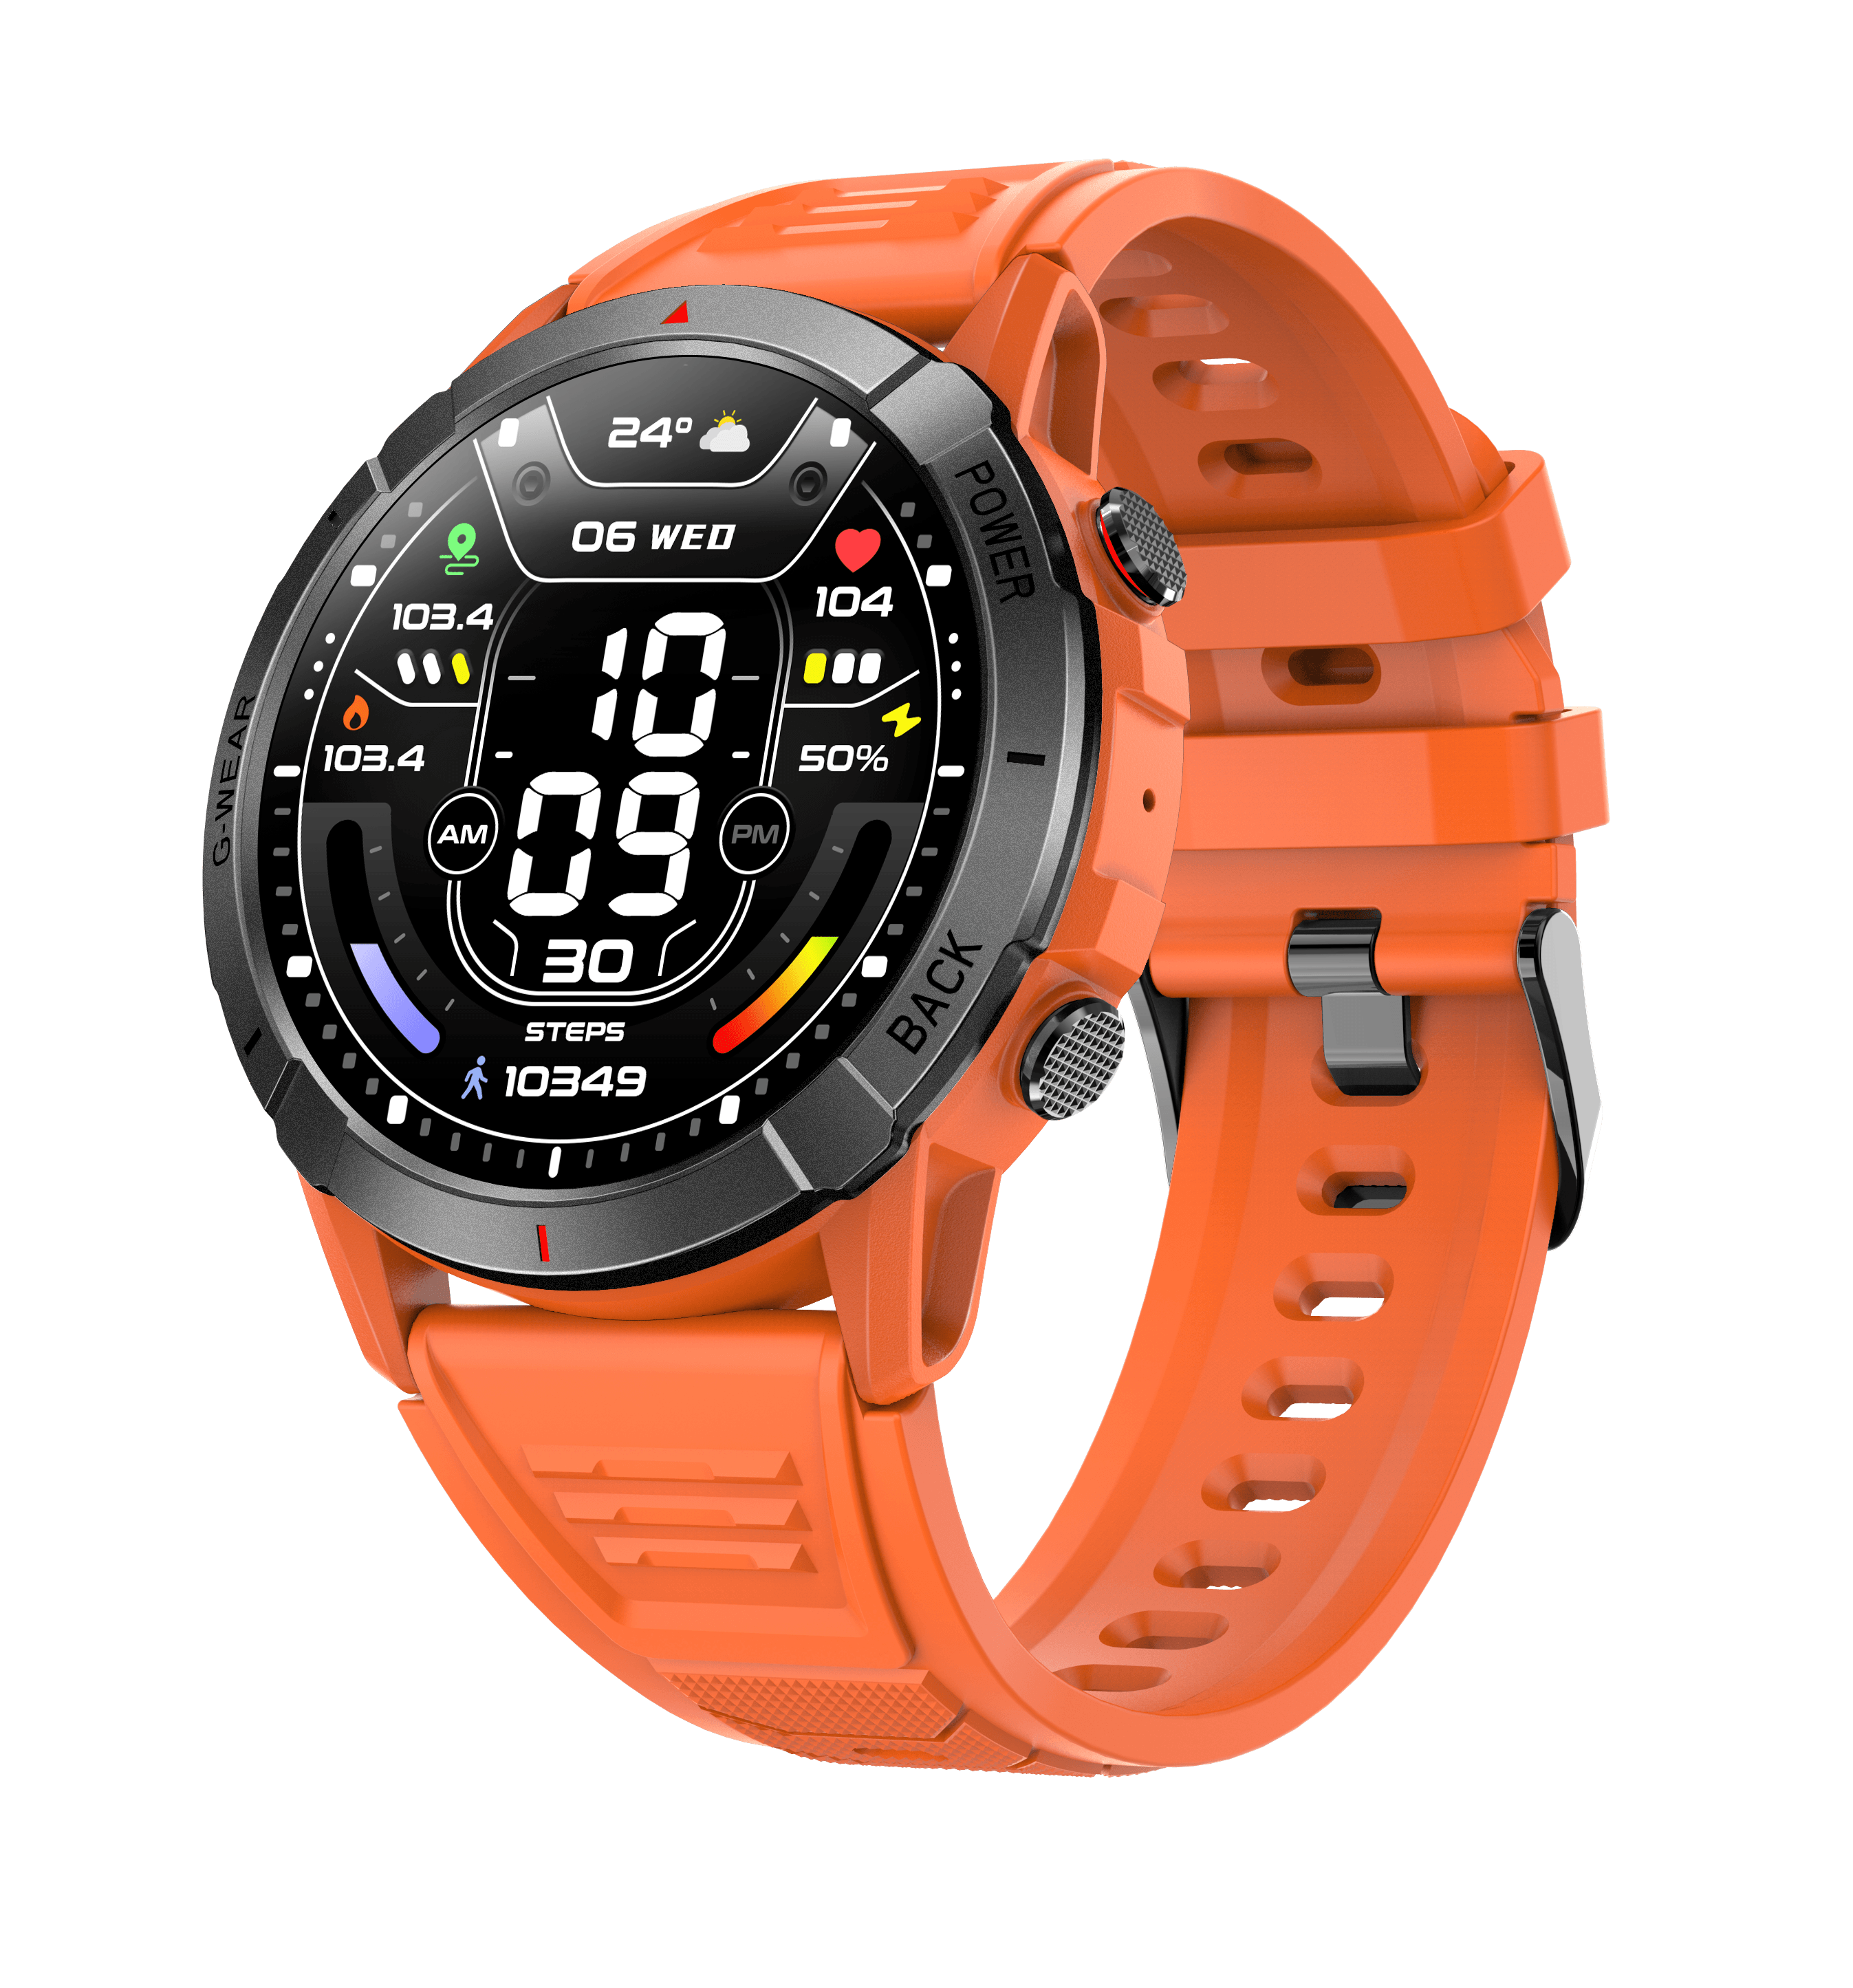 Ceas Smartwatch, BLEKSY®, Robust, 36mm AMOLED, Full Touch Screen, Apeluri, Notificari, Baterie durabila, Portocaliu